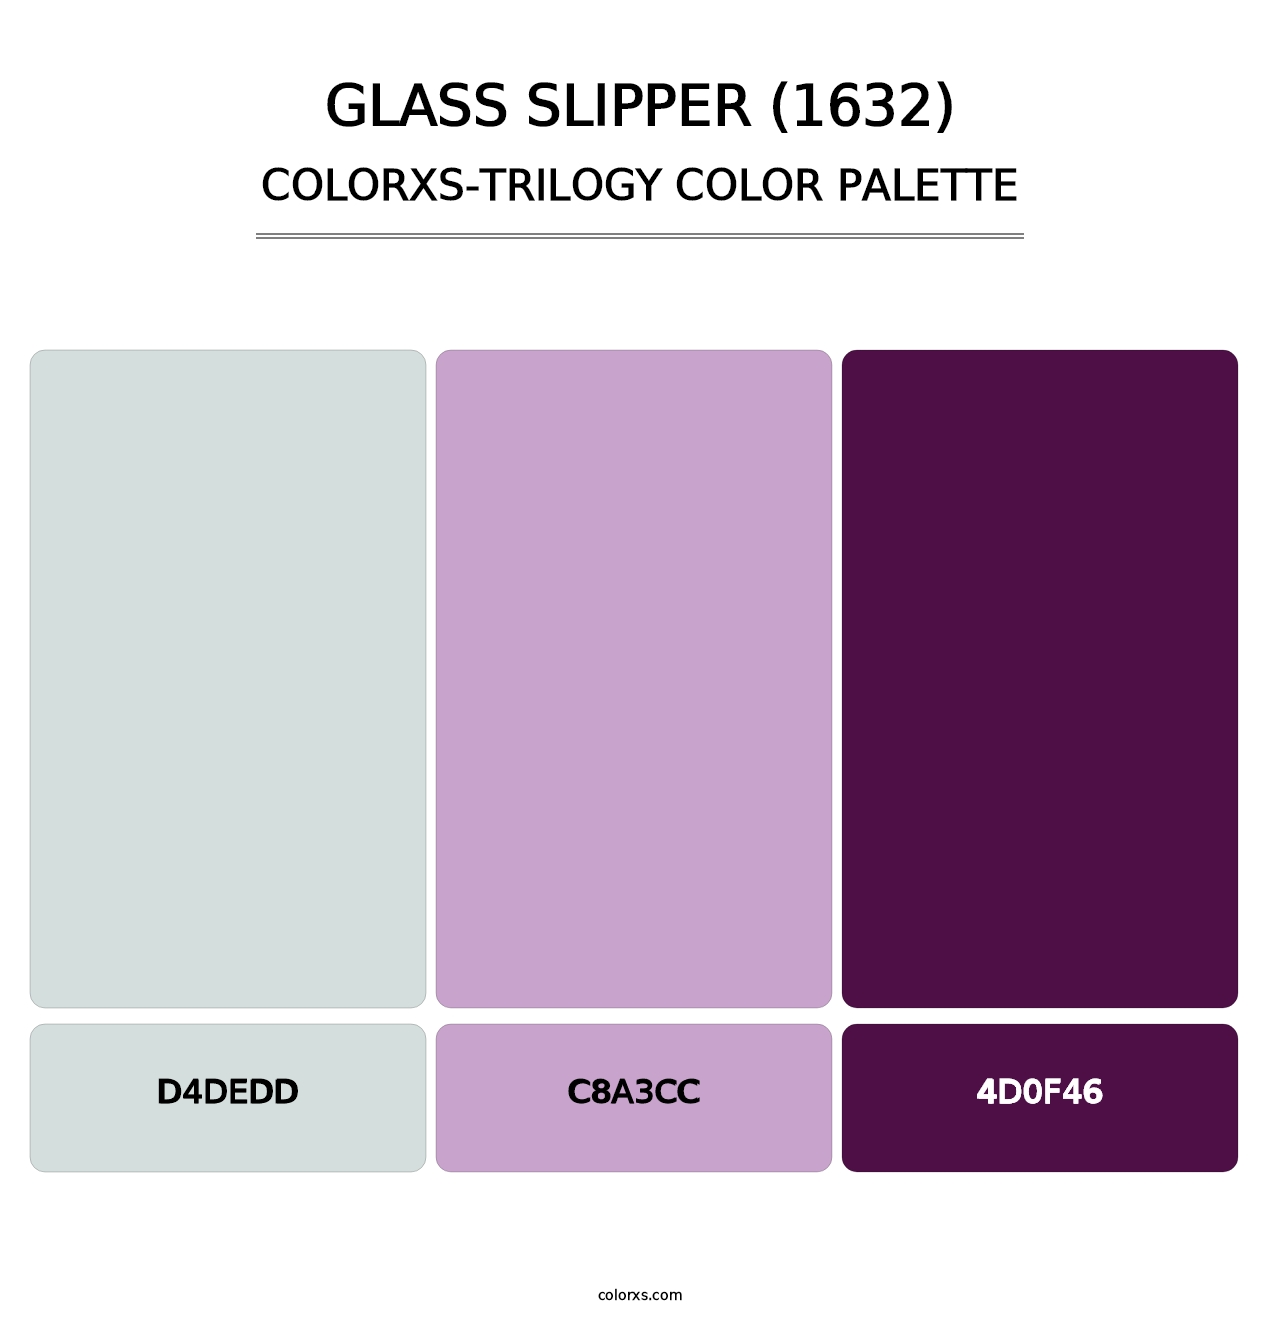 Glass Slipper (1632) - Colorxs Trilogy Palette